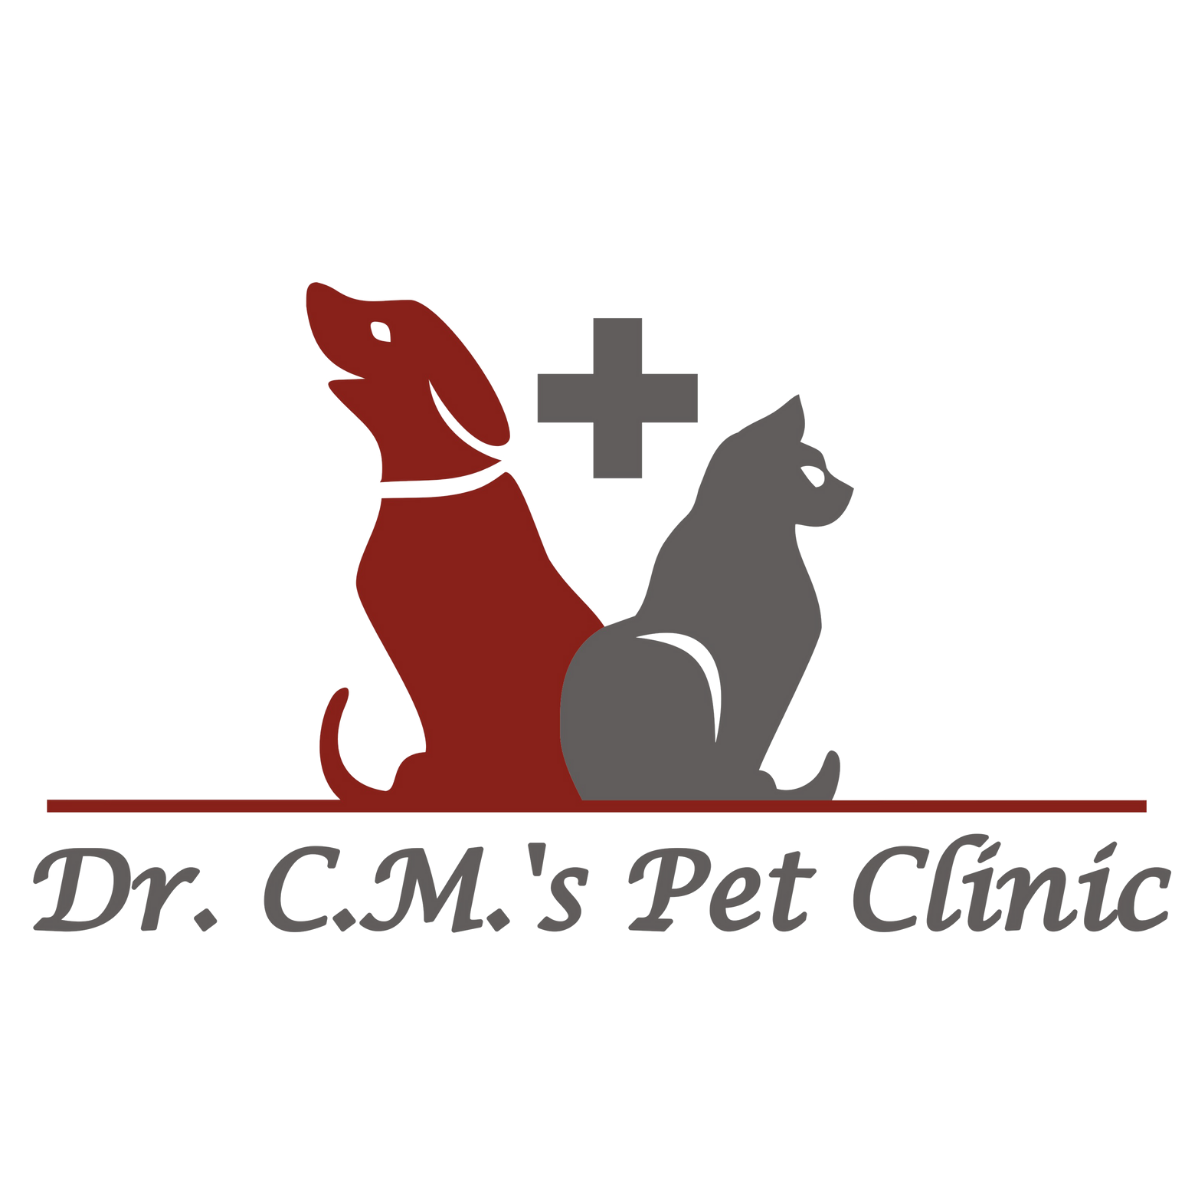 Dr.C.M.'s Pet Clinic|Dentists|Medical Services